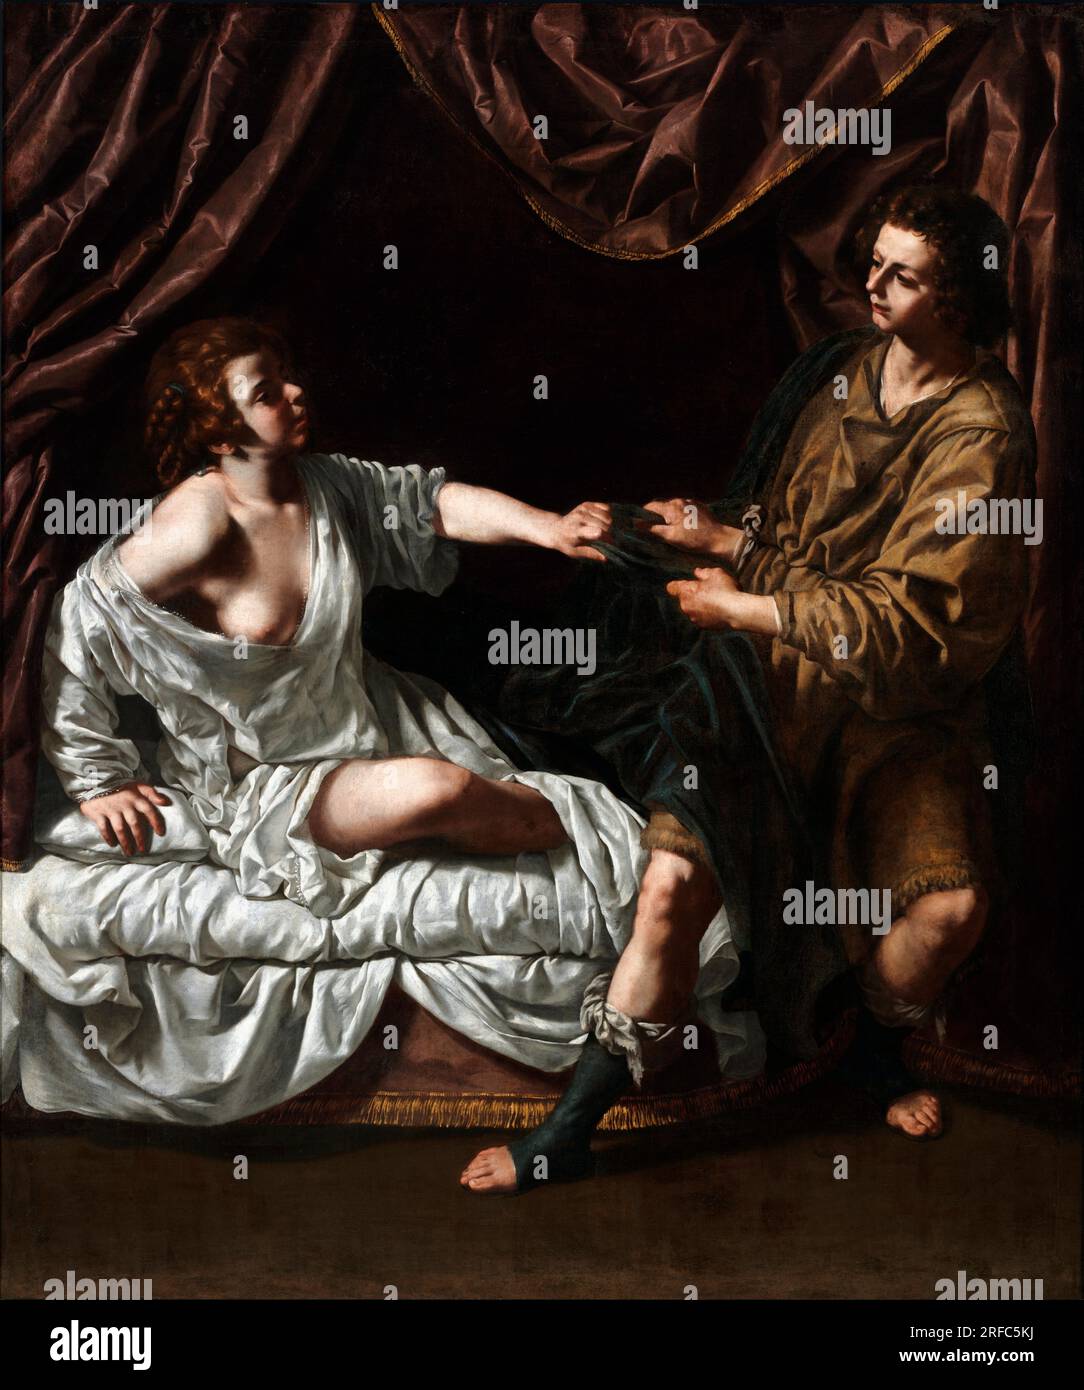 Joseph und Potiphars Frau von Paolo Domenico Finoglia oder Finoglio (ca. 1590-1645), Öl auf Leinwand, ca. 1640 Stockfoto